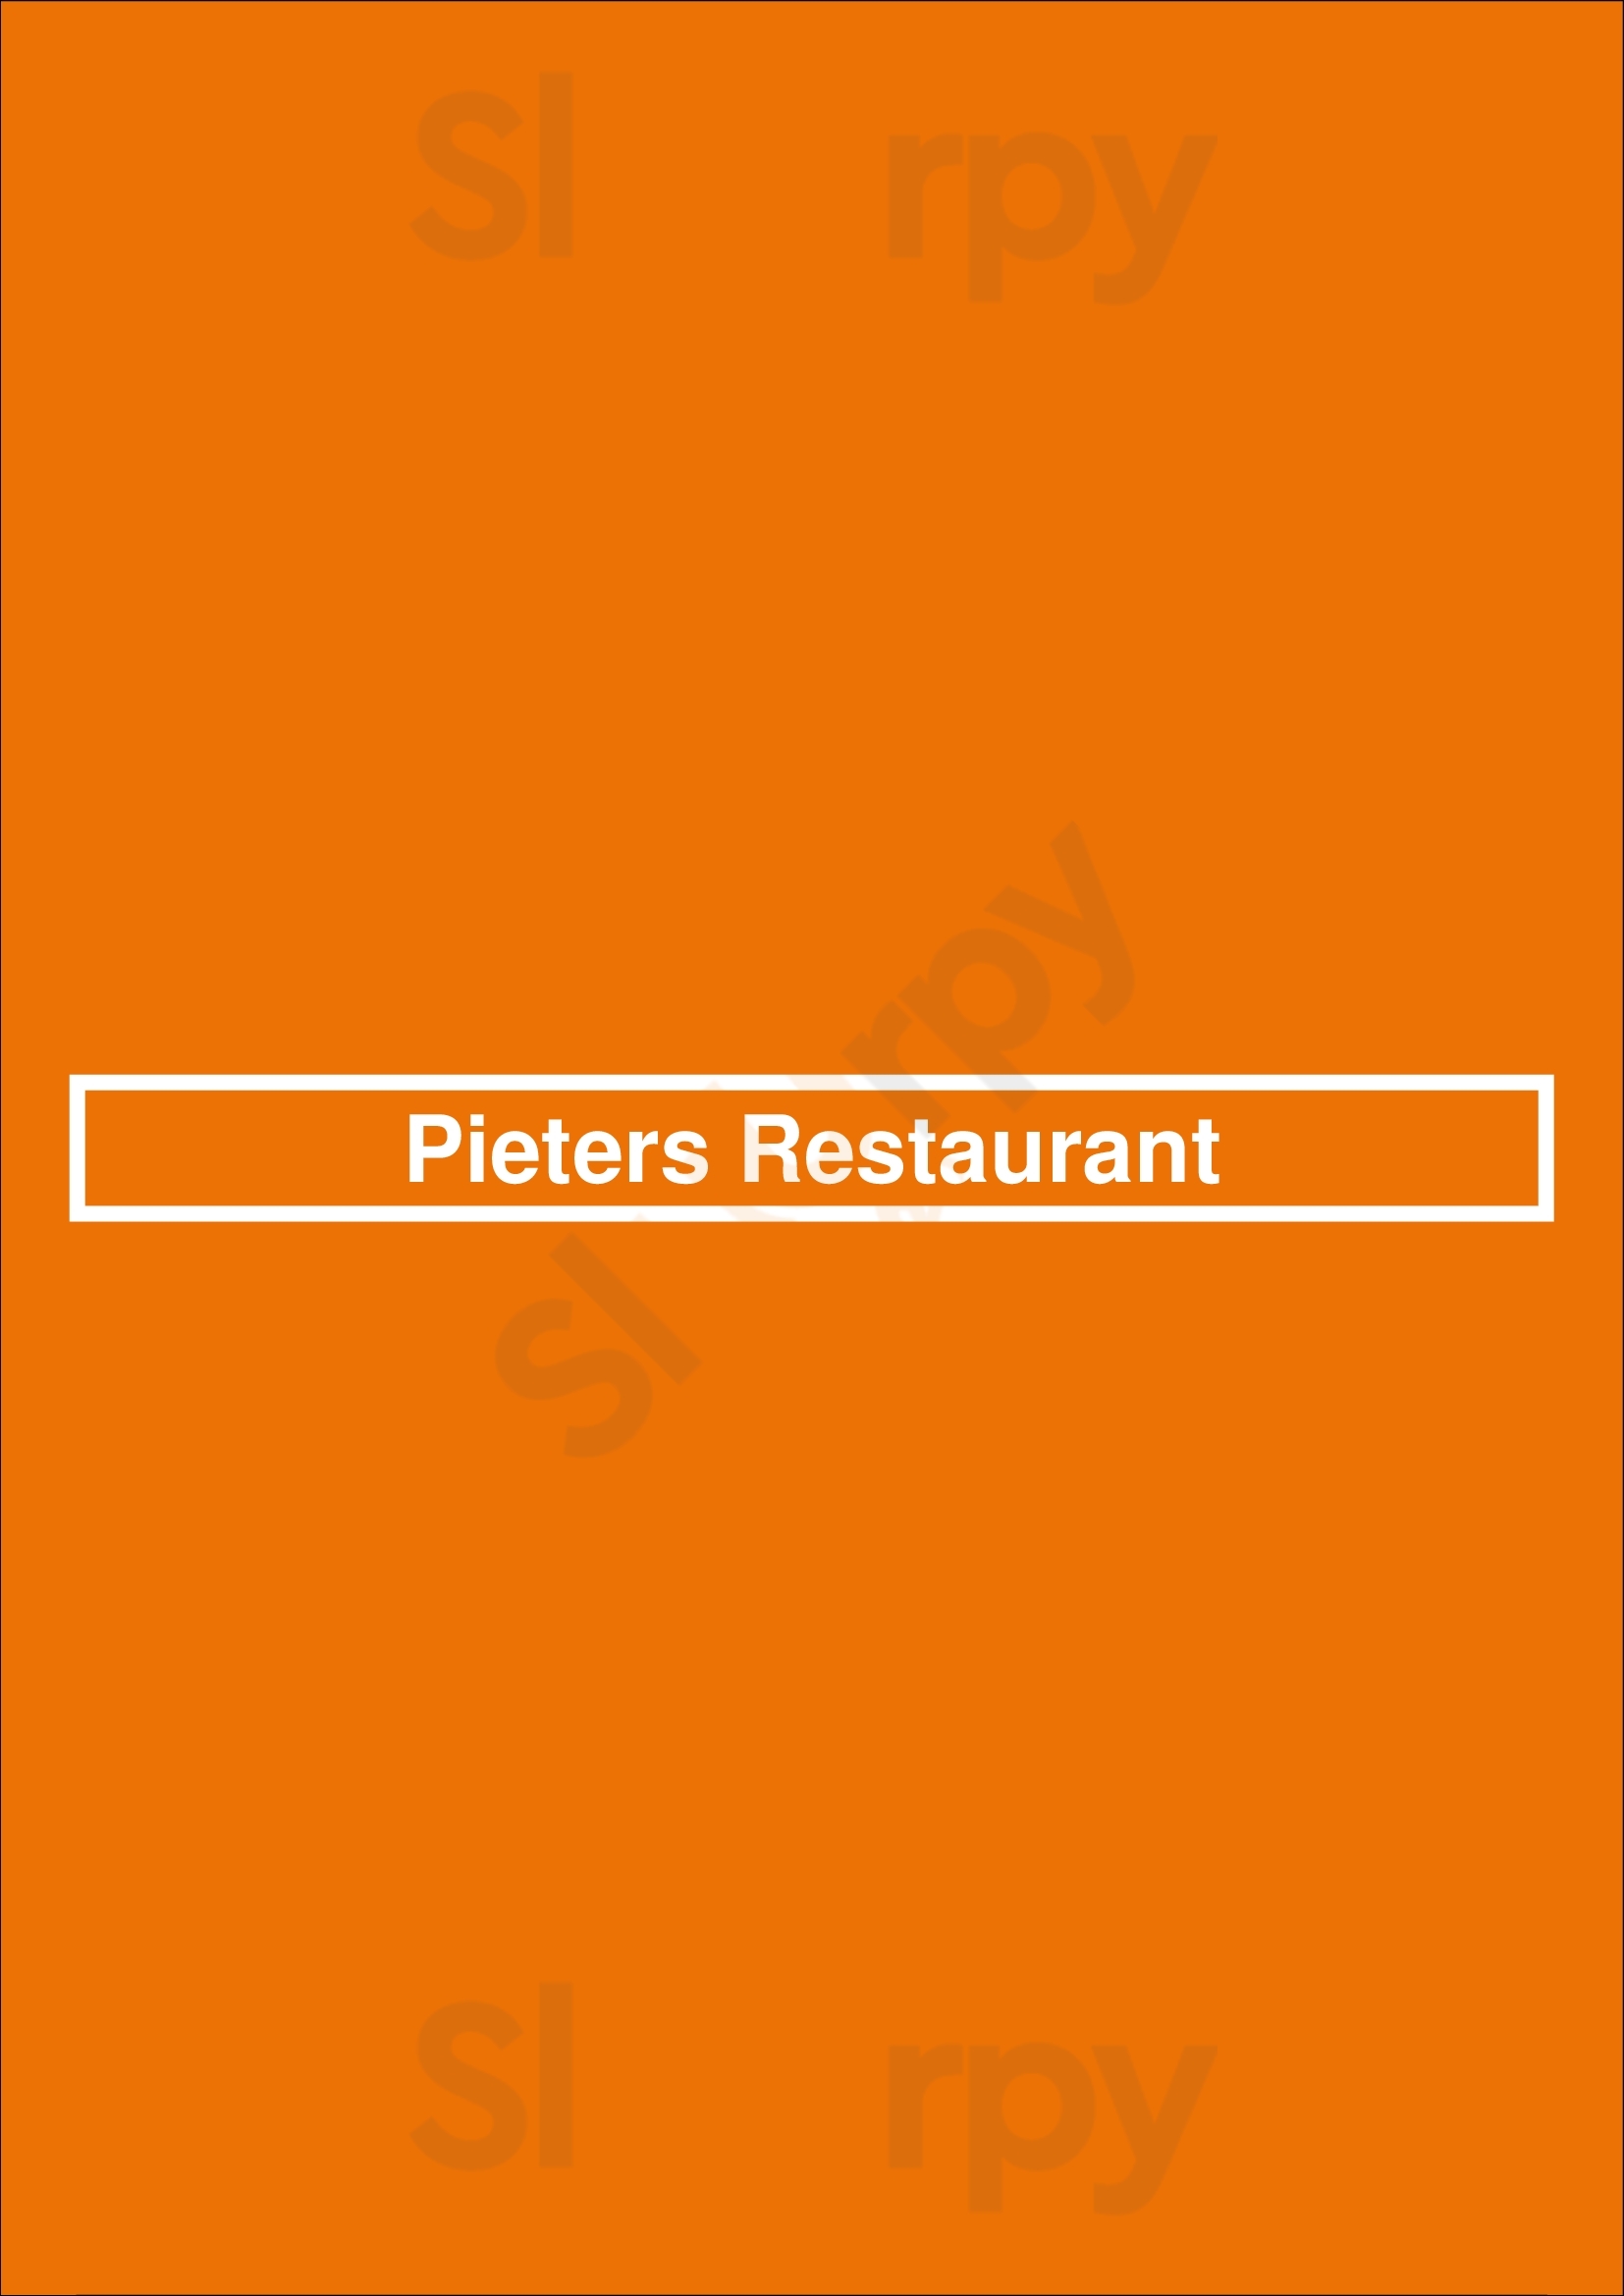 Pieters Restaurant Bergambacht Menu - 1